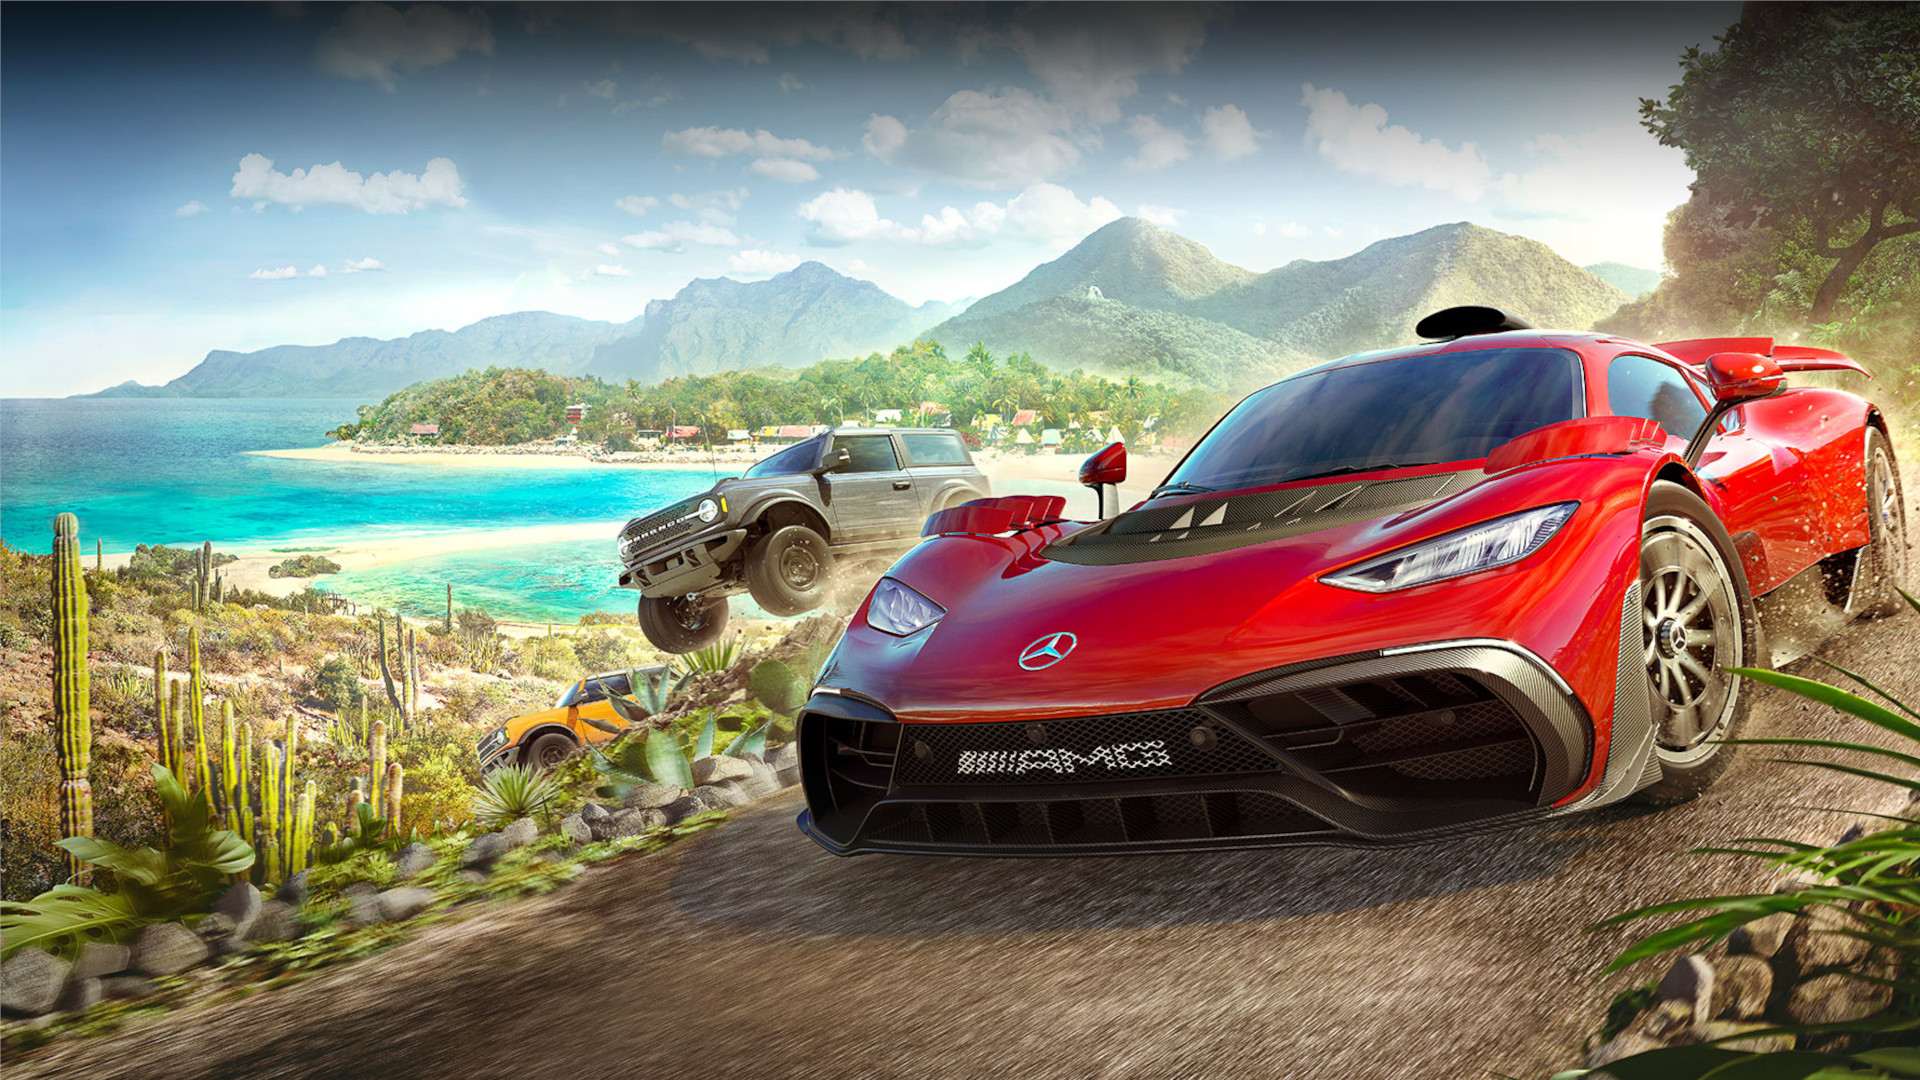 Forza Horizon 5 System Requirements — Can I Run Forza Horizon 5 on My PC?